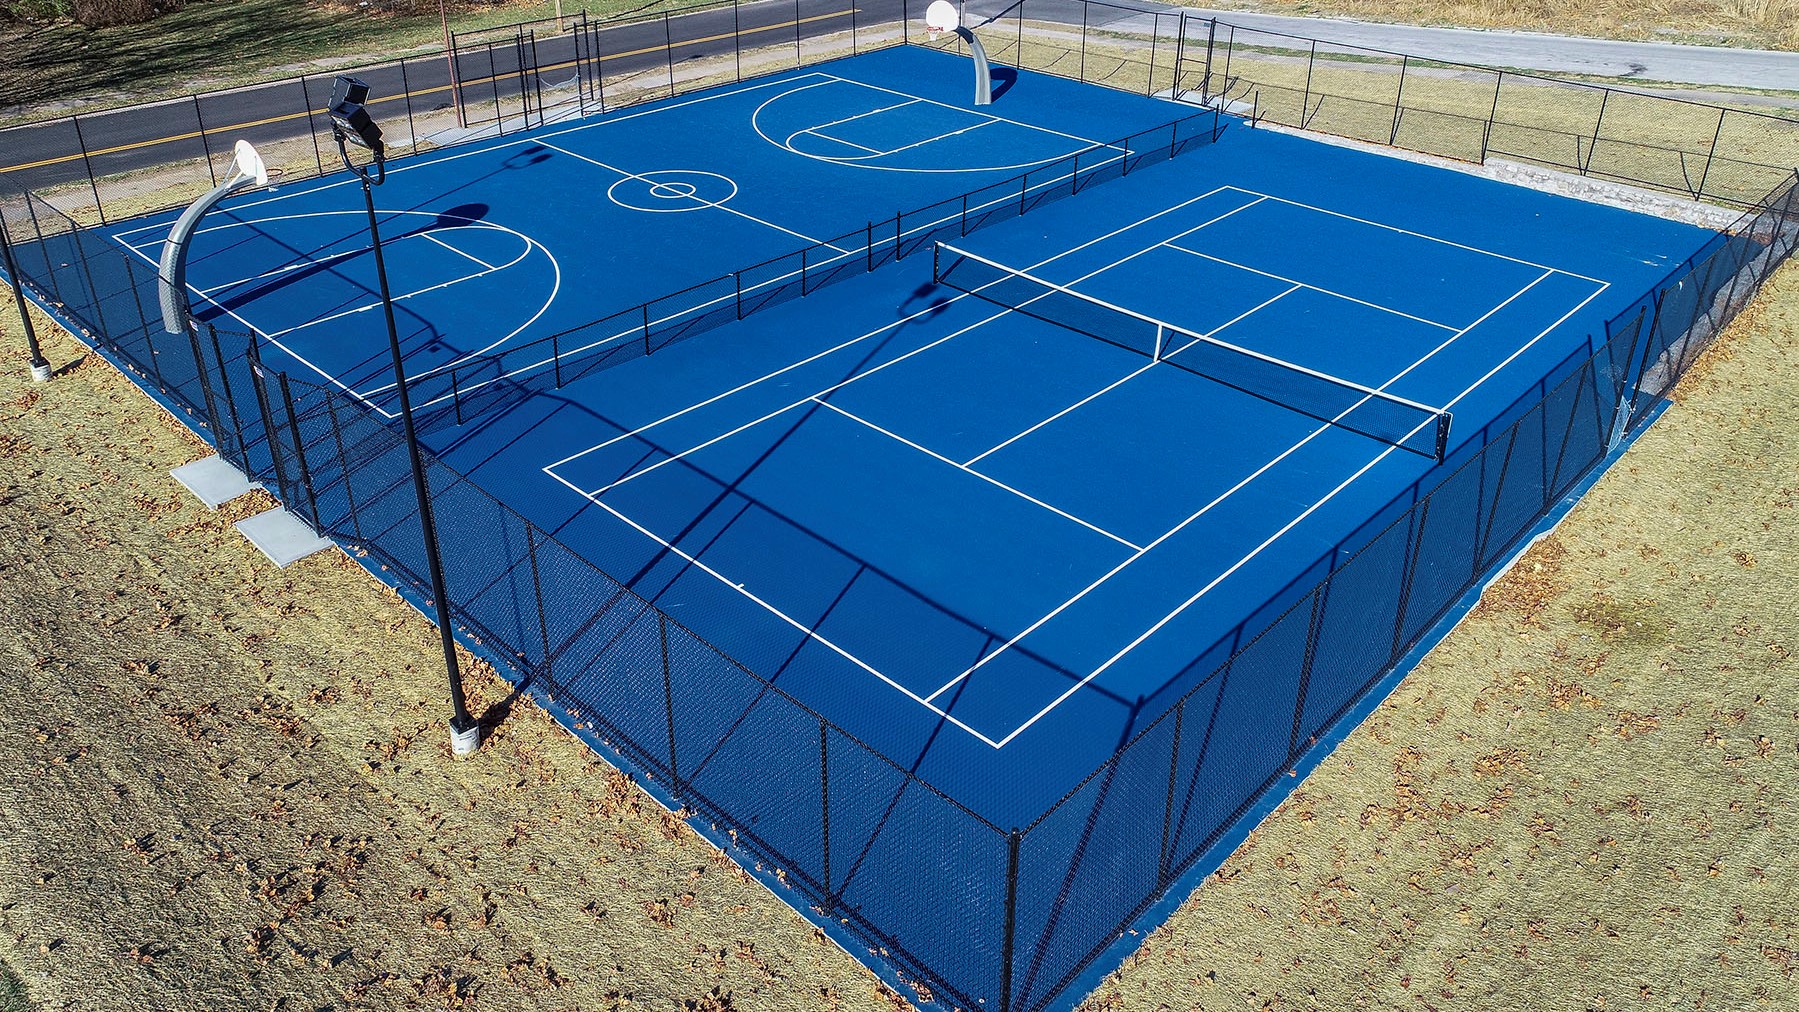 Nelson C. Crews Square Tennis Courts